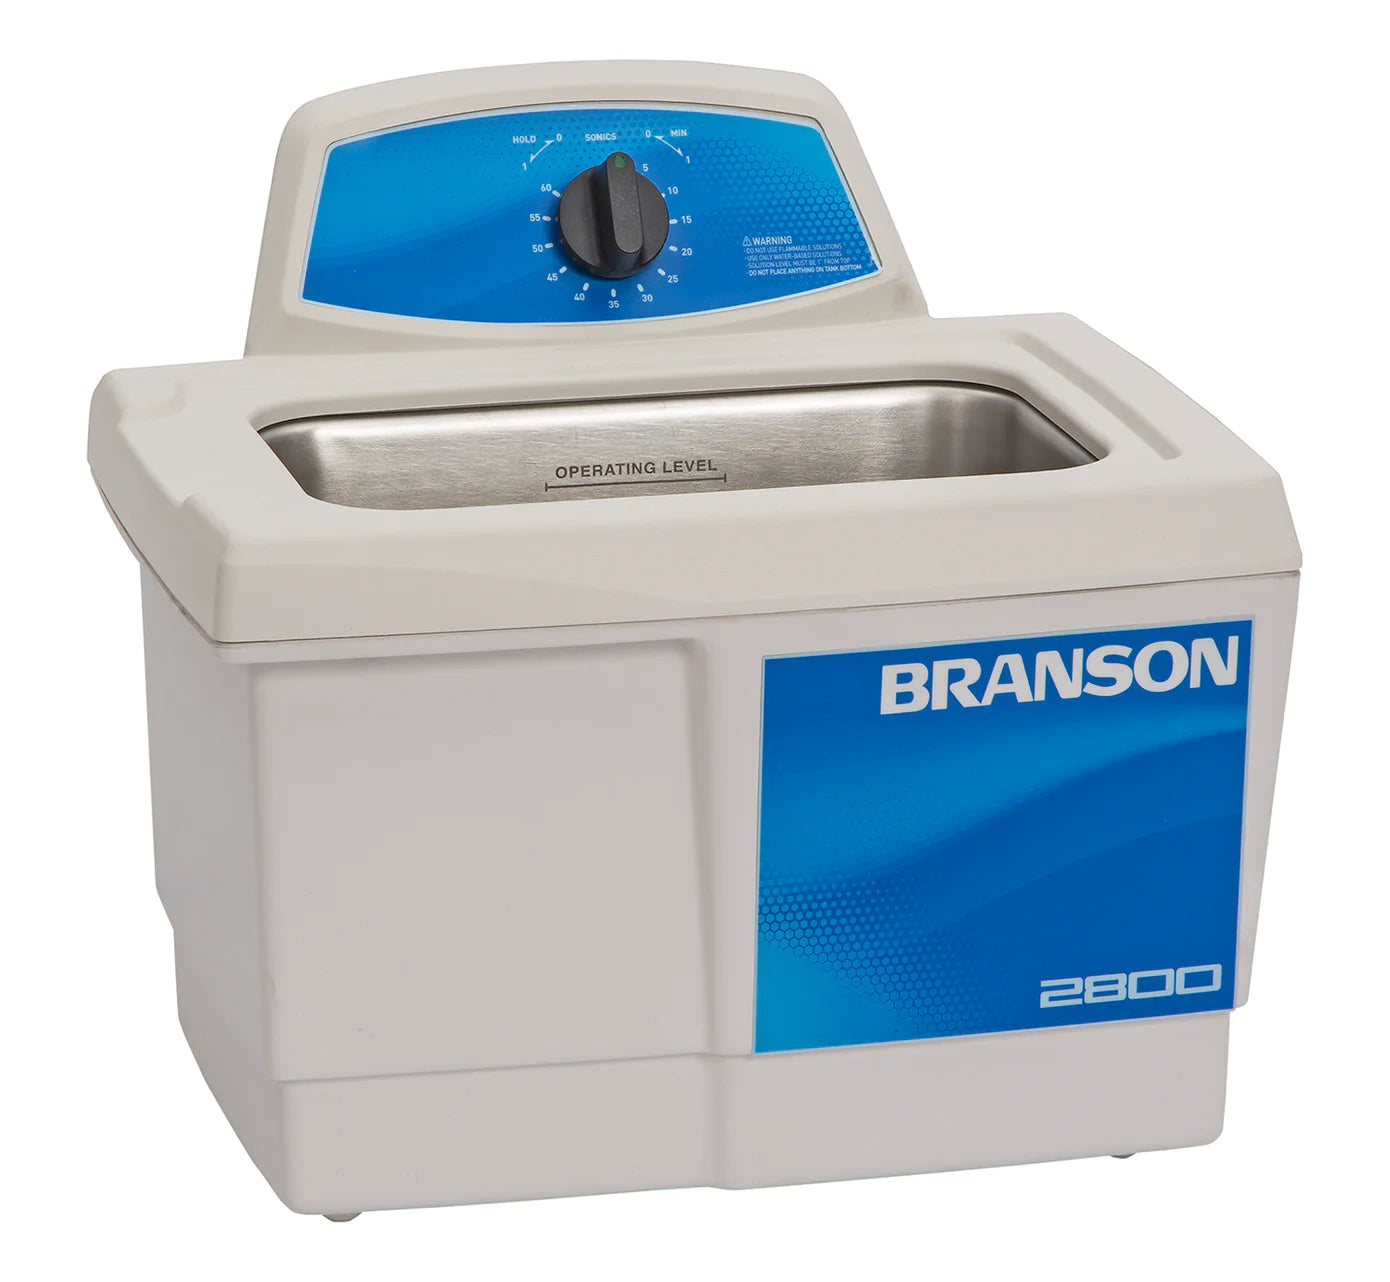 branson-m2800